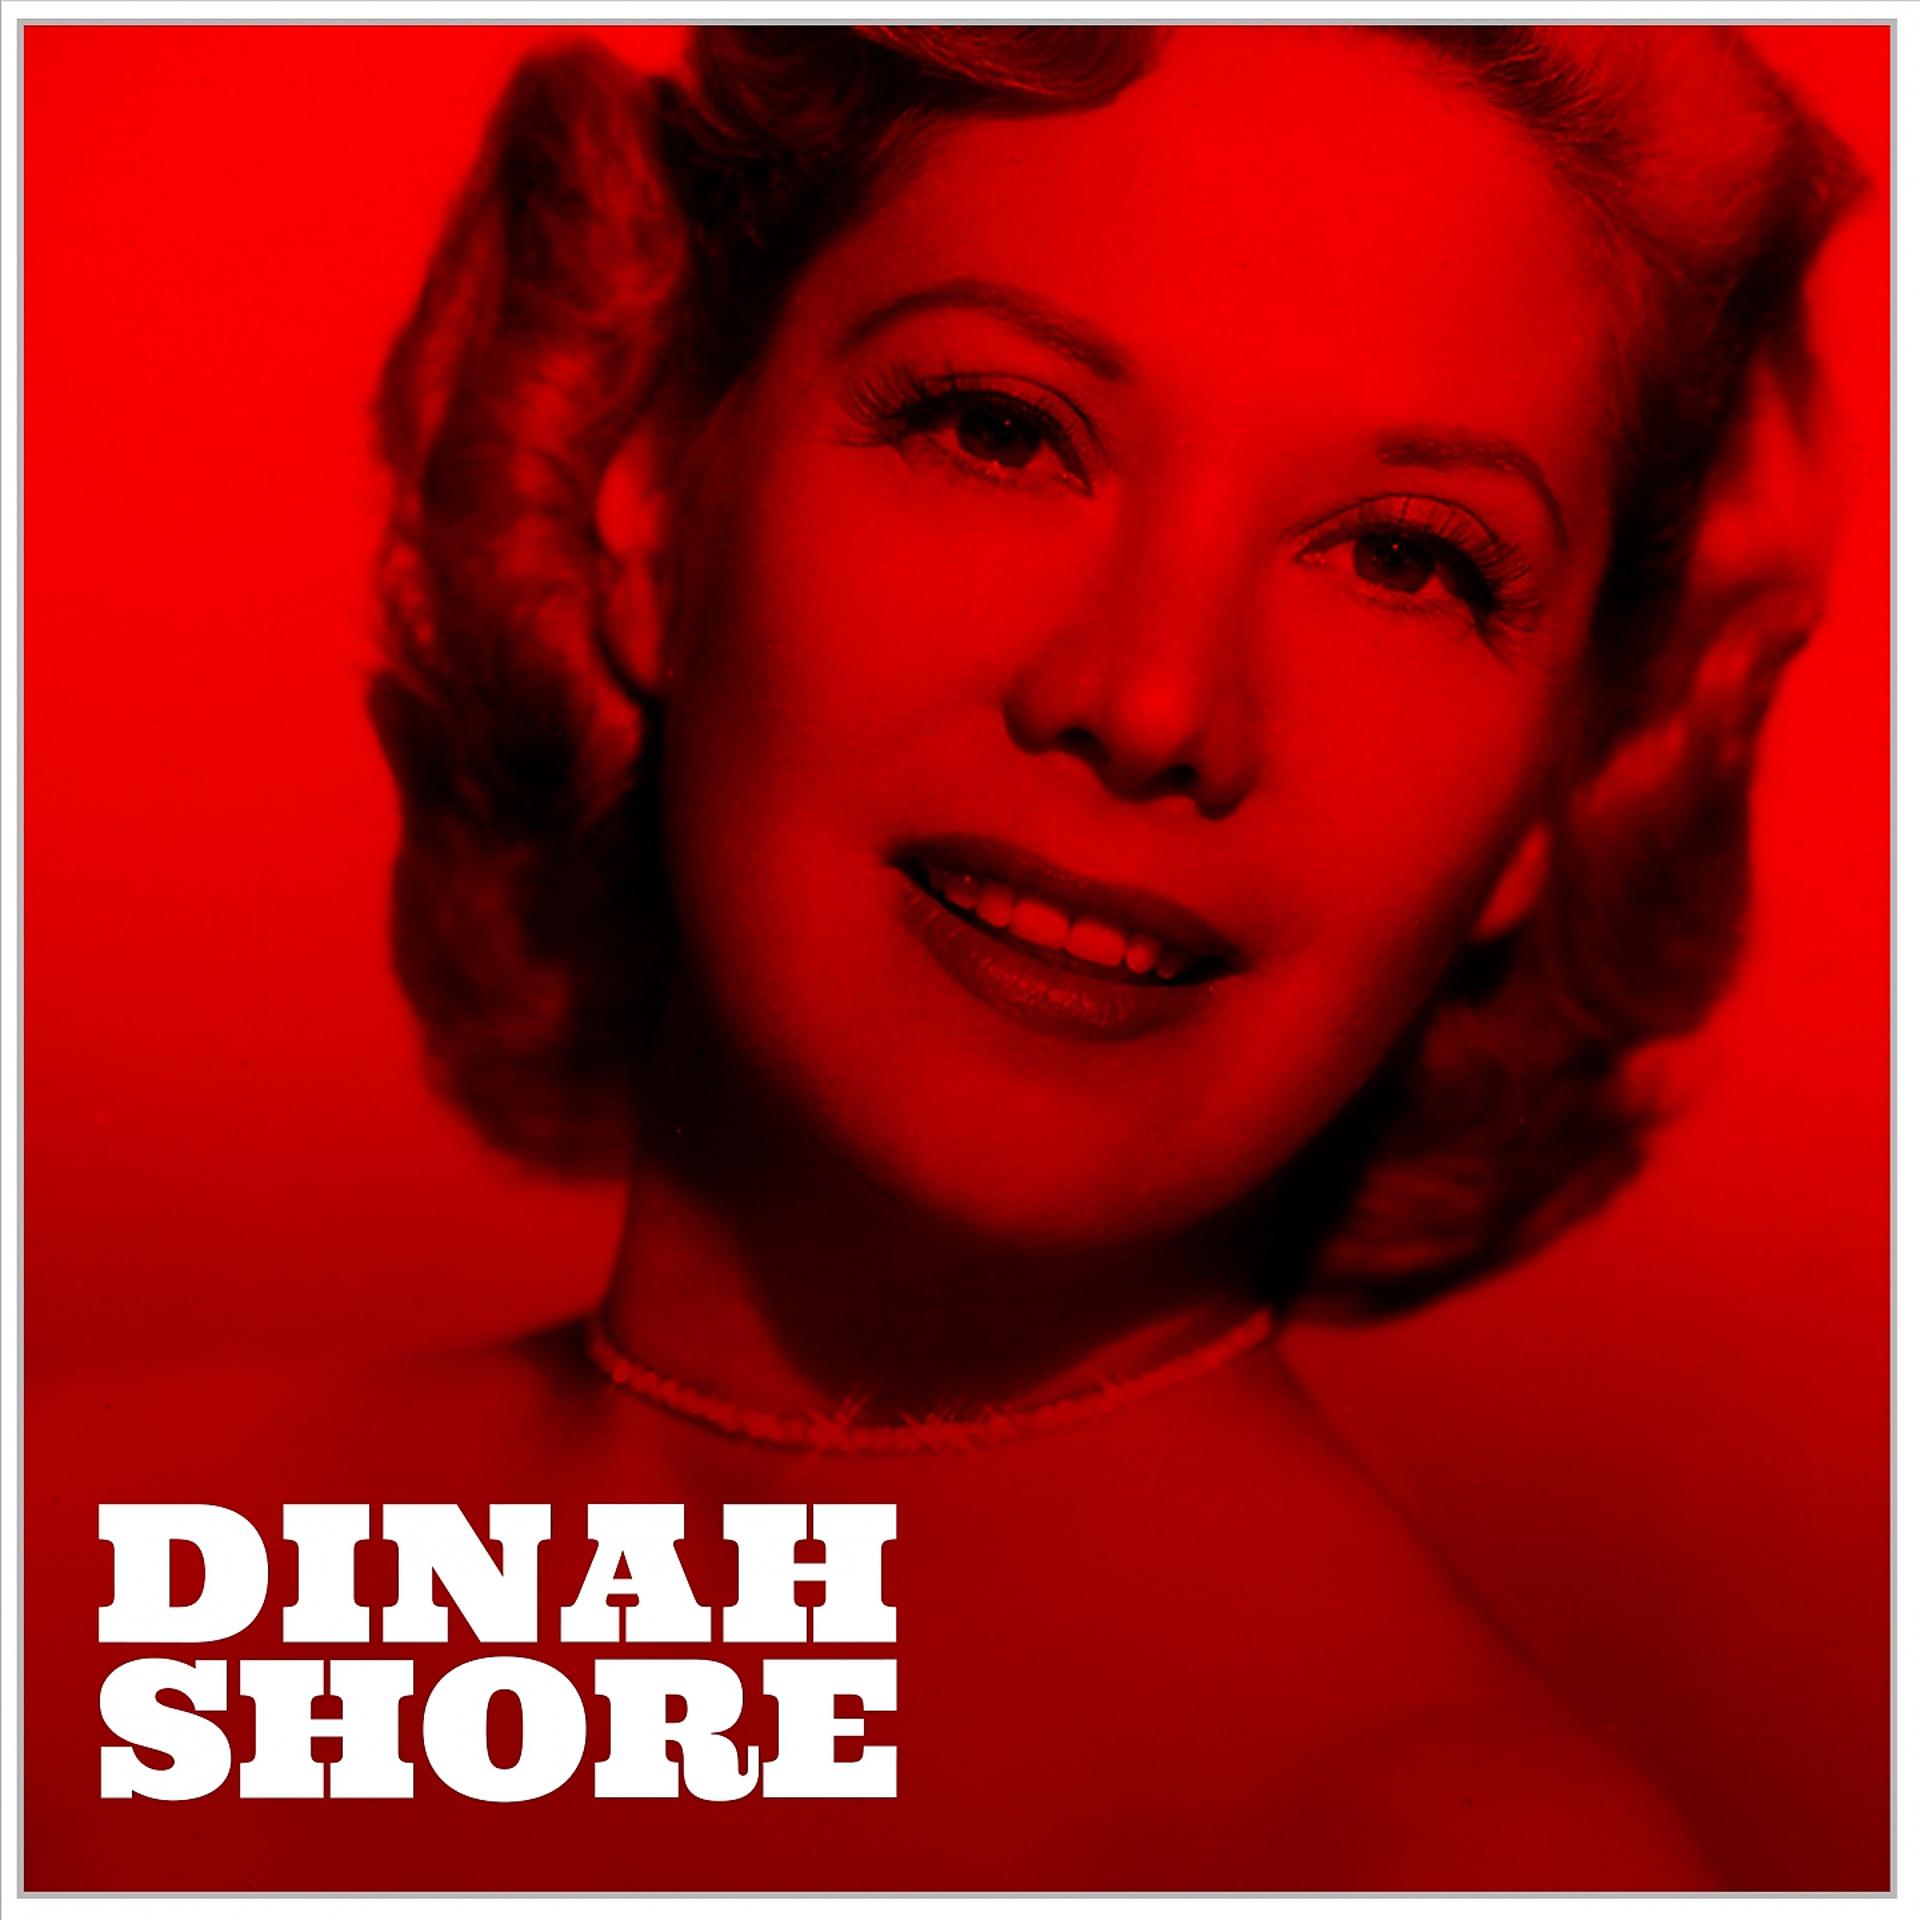 Постер к треку Dinah Shore - How Come You Do Me Like You Do